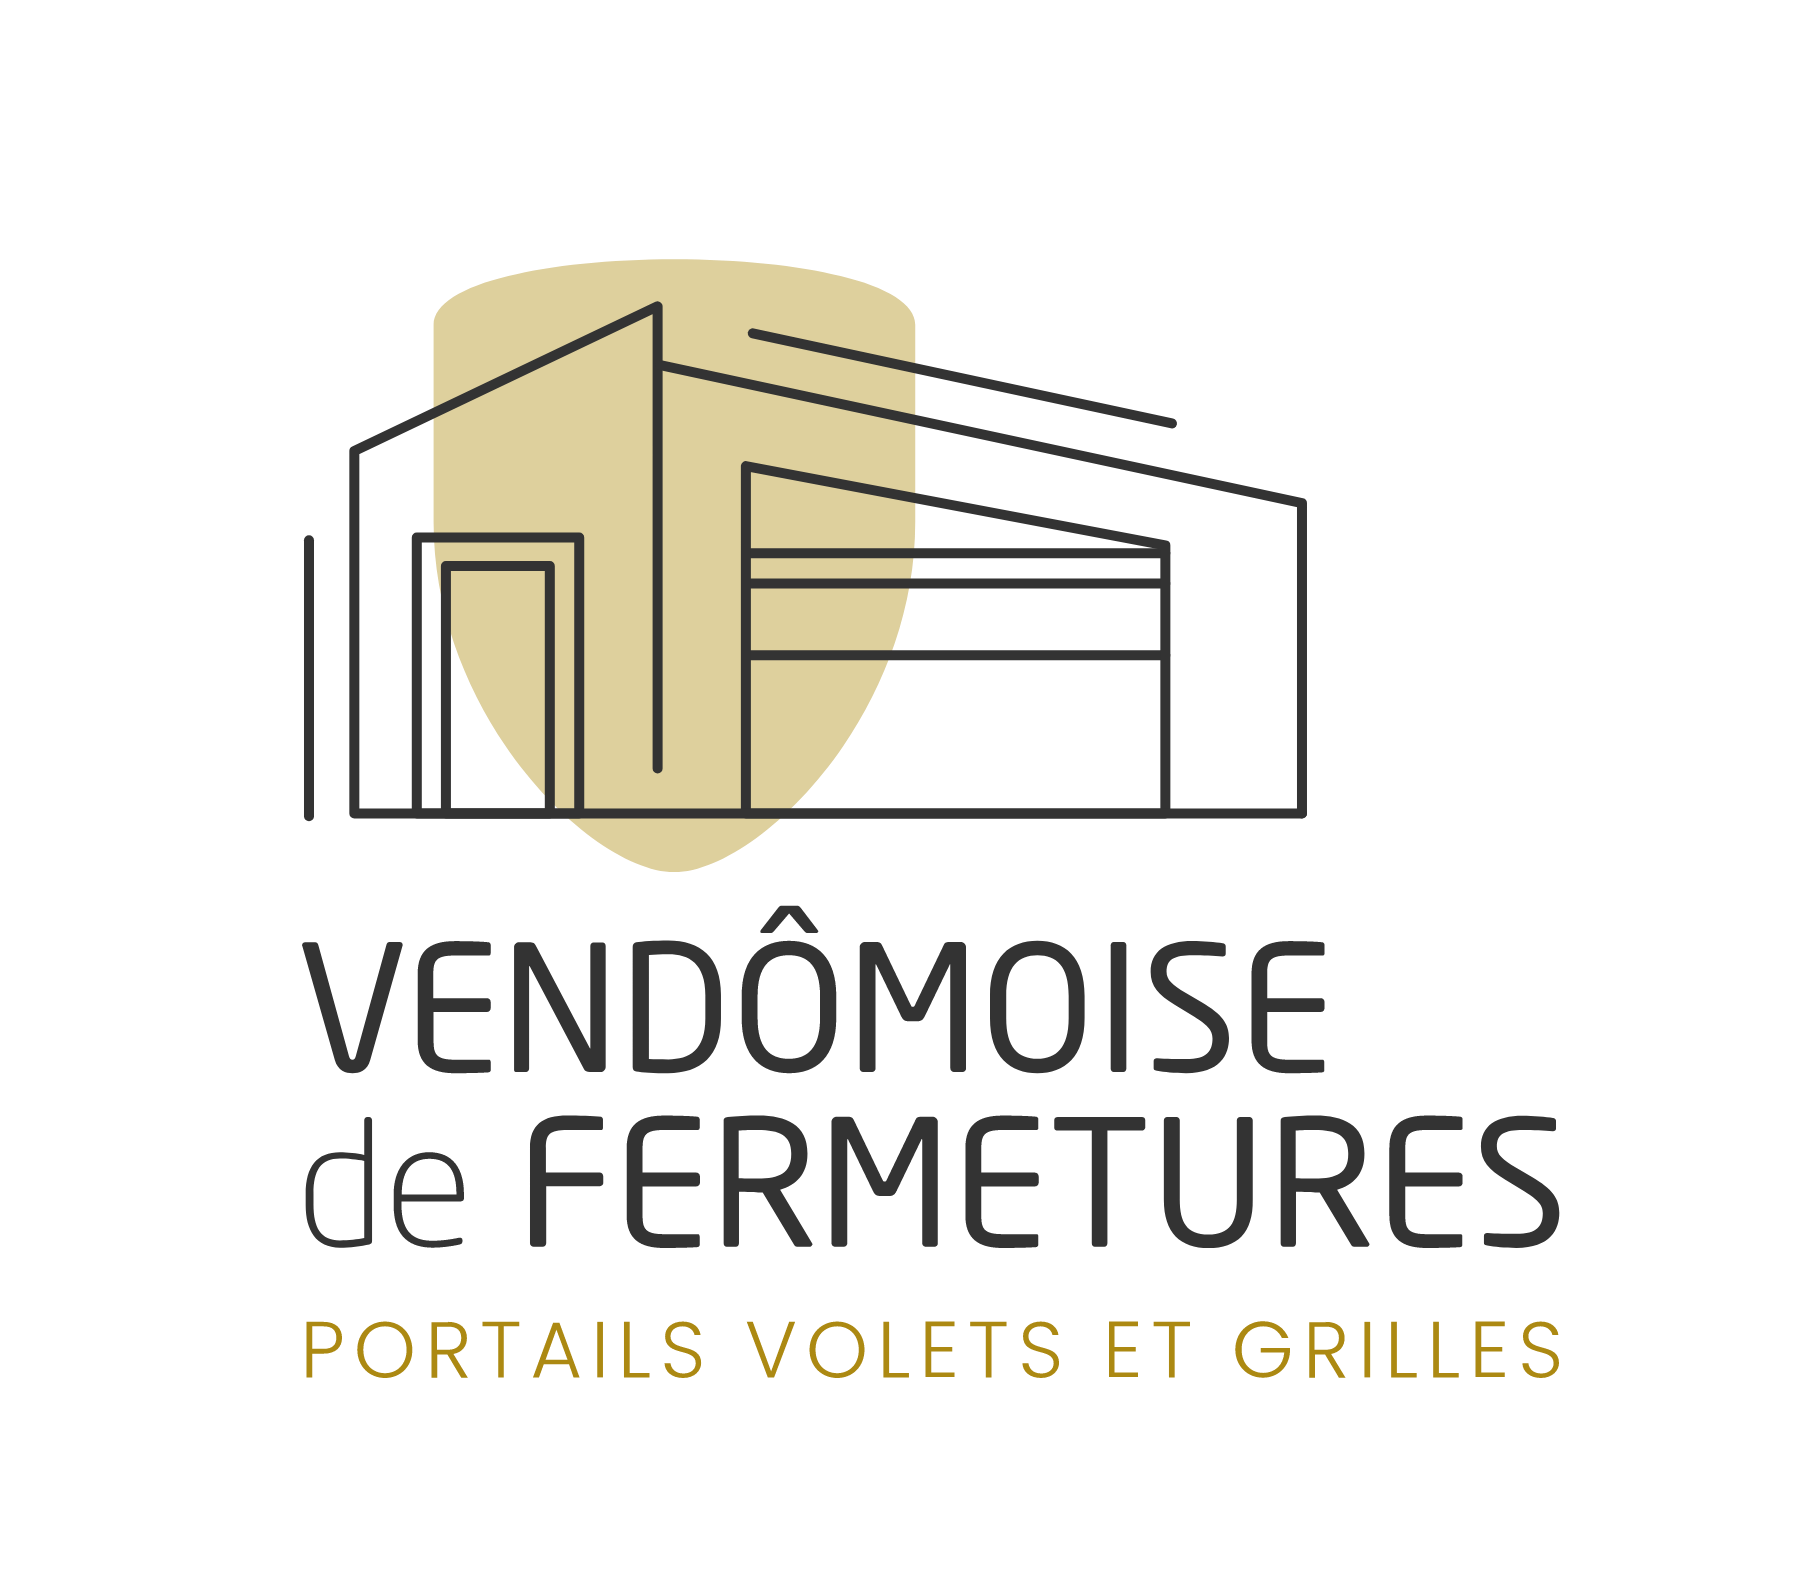 image-identite-logo-Vendomoise-de-Fermetures-agence-conseil-en-communication-Letb-synergie